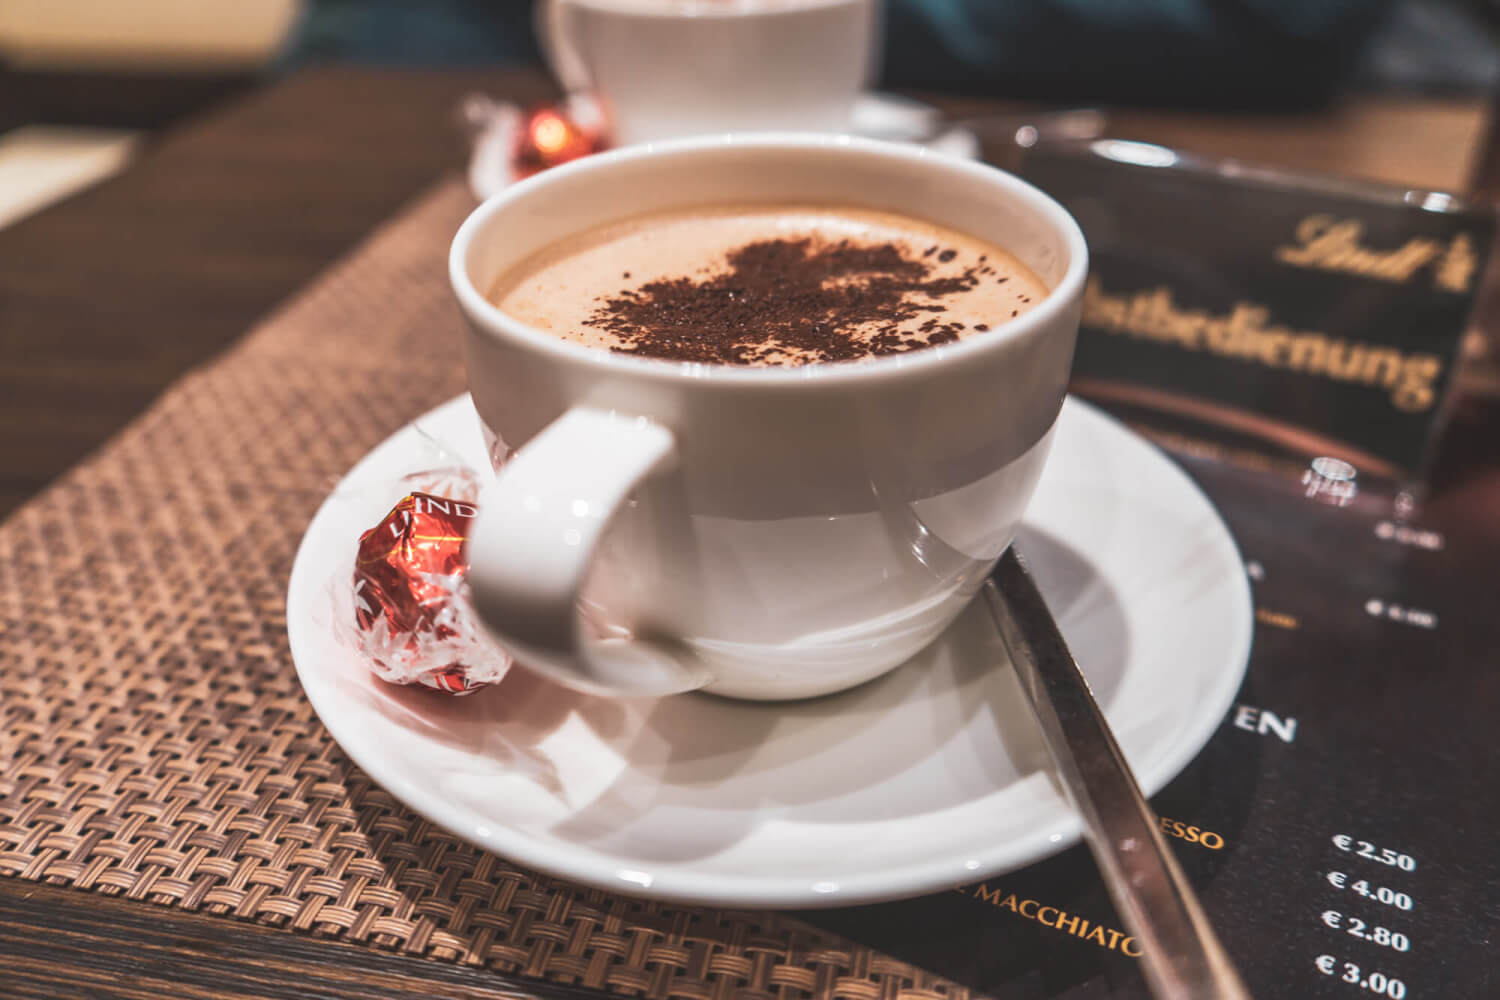 Lindt hot chocolate in Dusseldorf, Germany